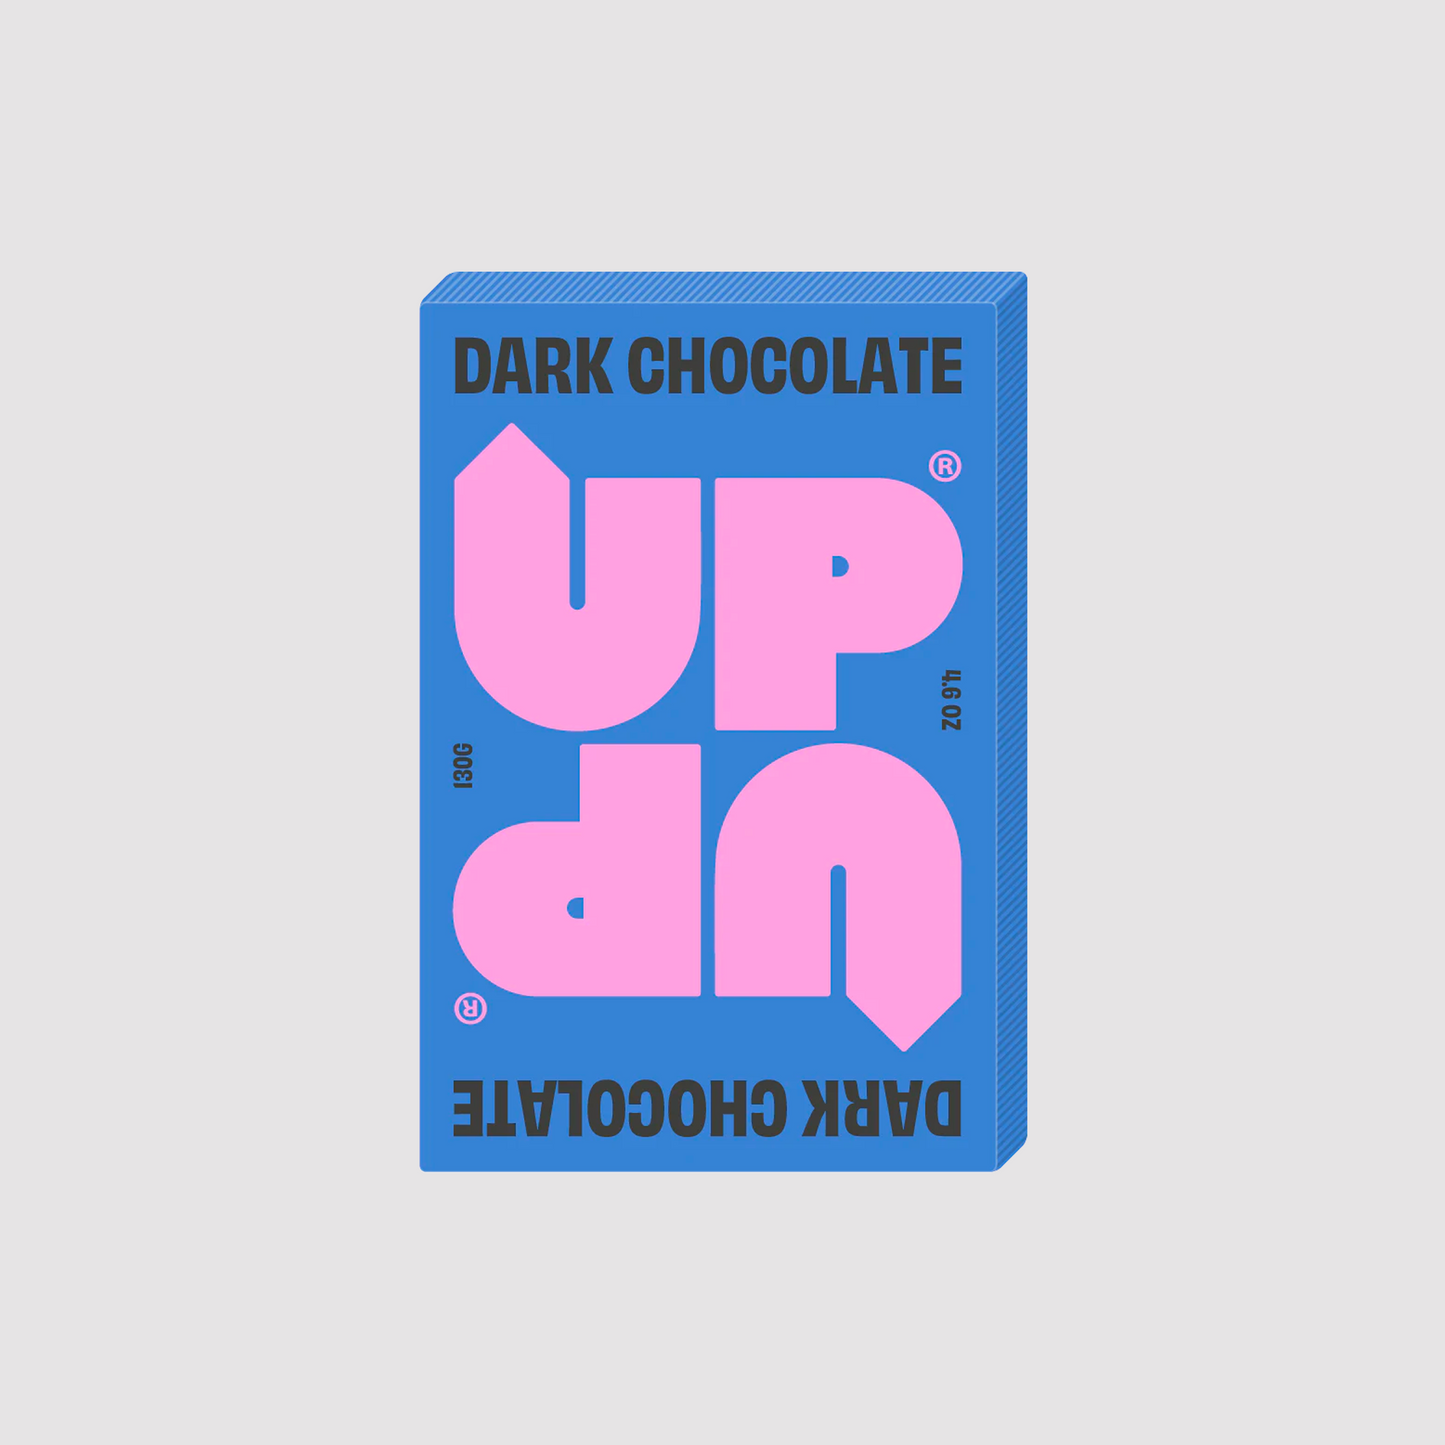 Original Dark Chocolate